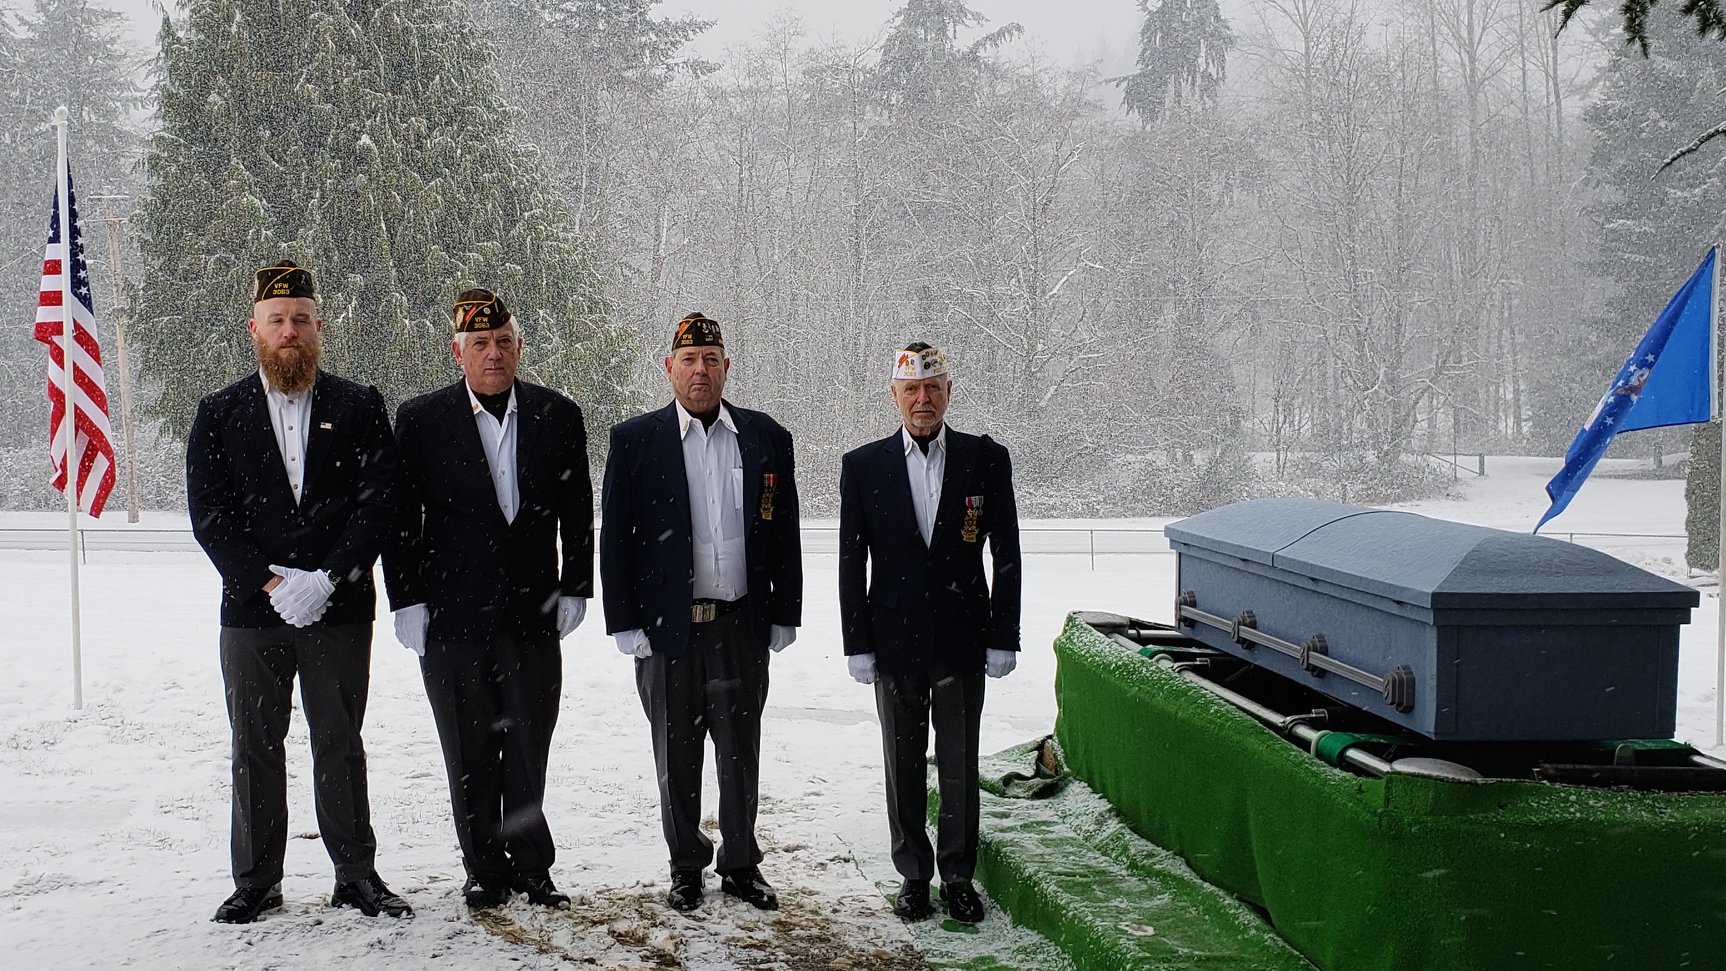 Robert Smalls funeral